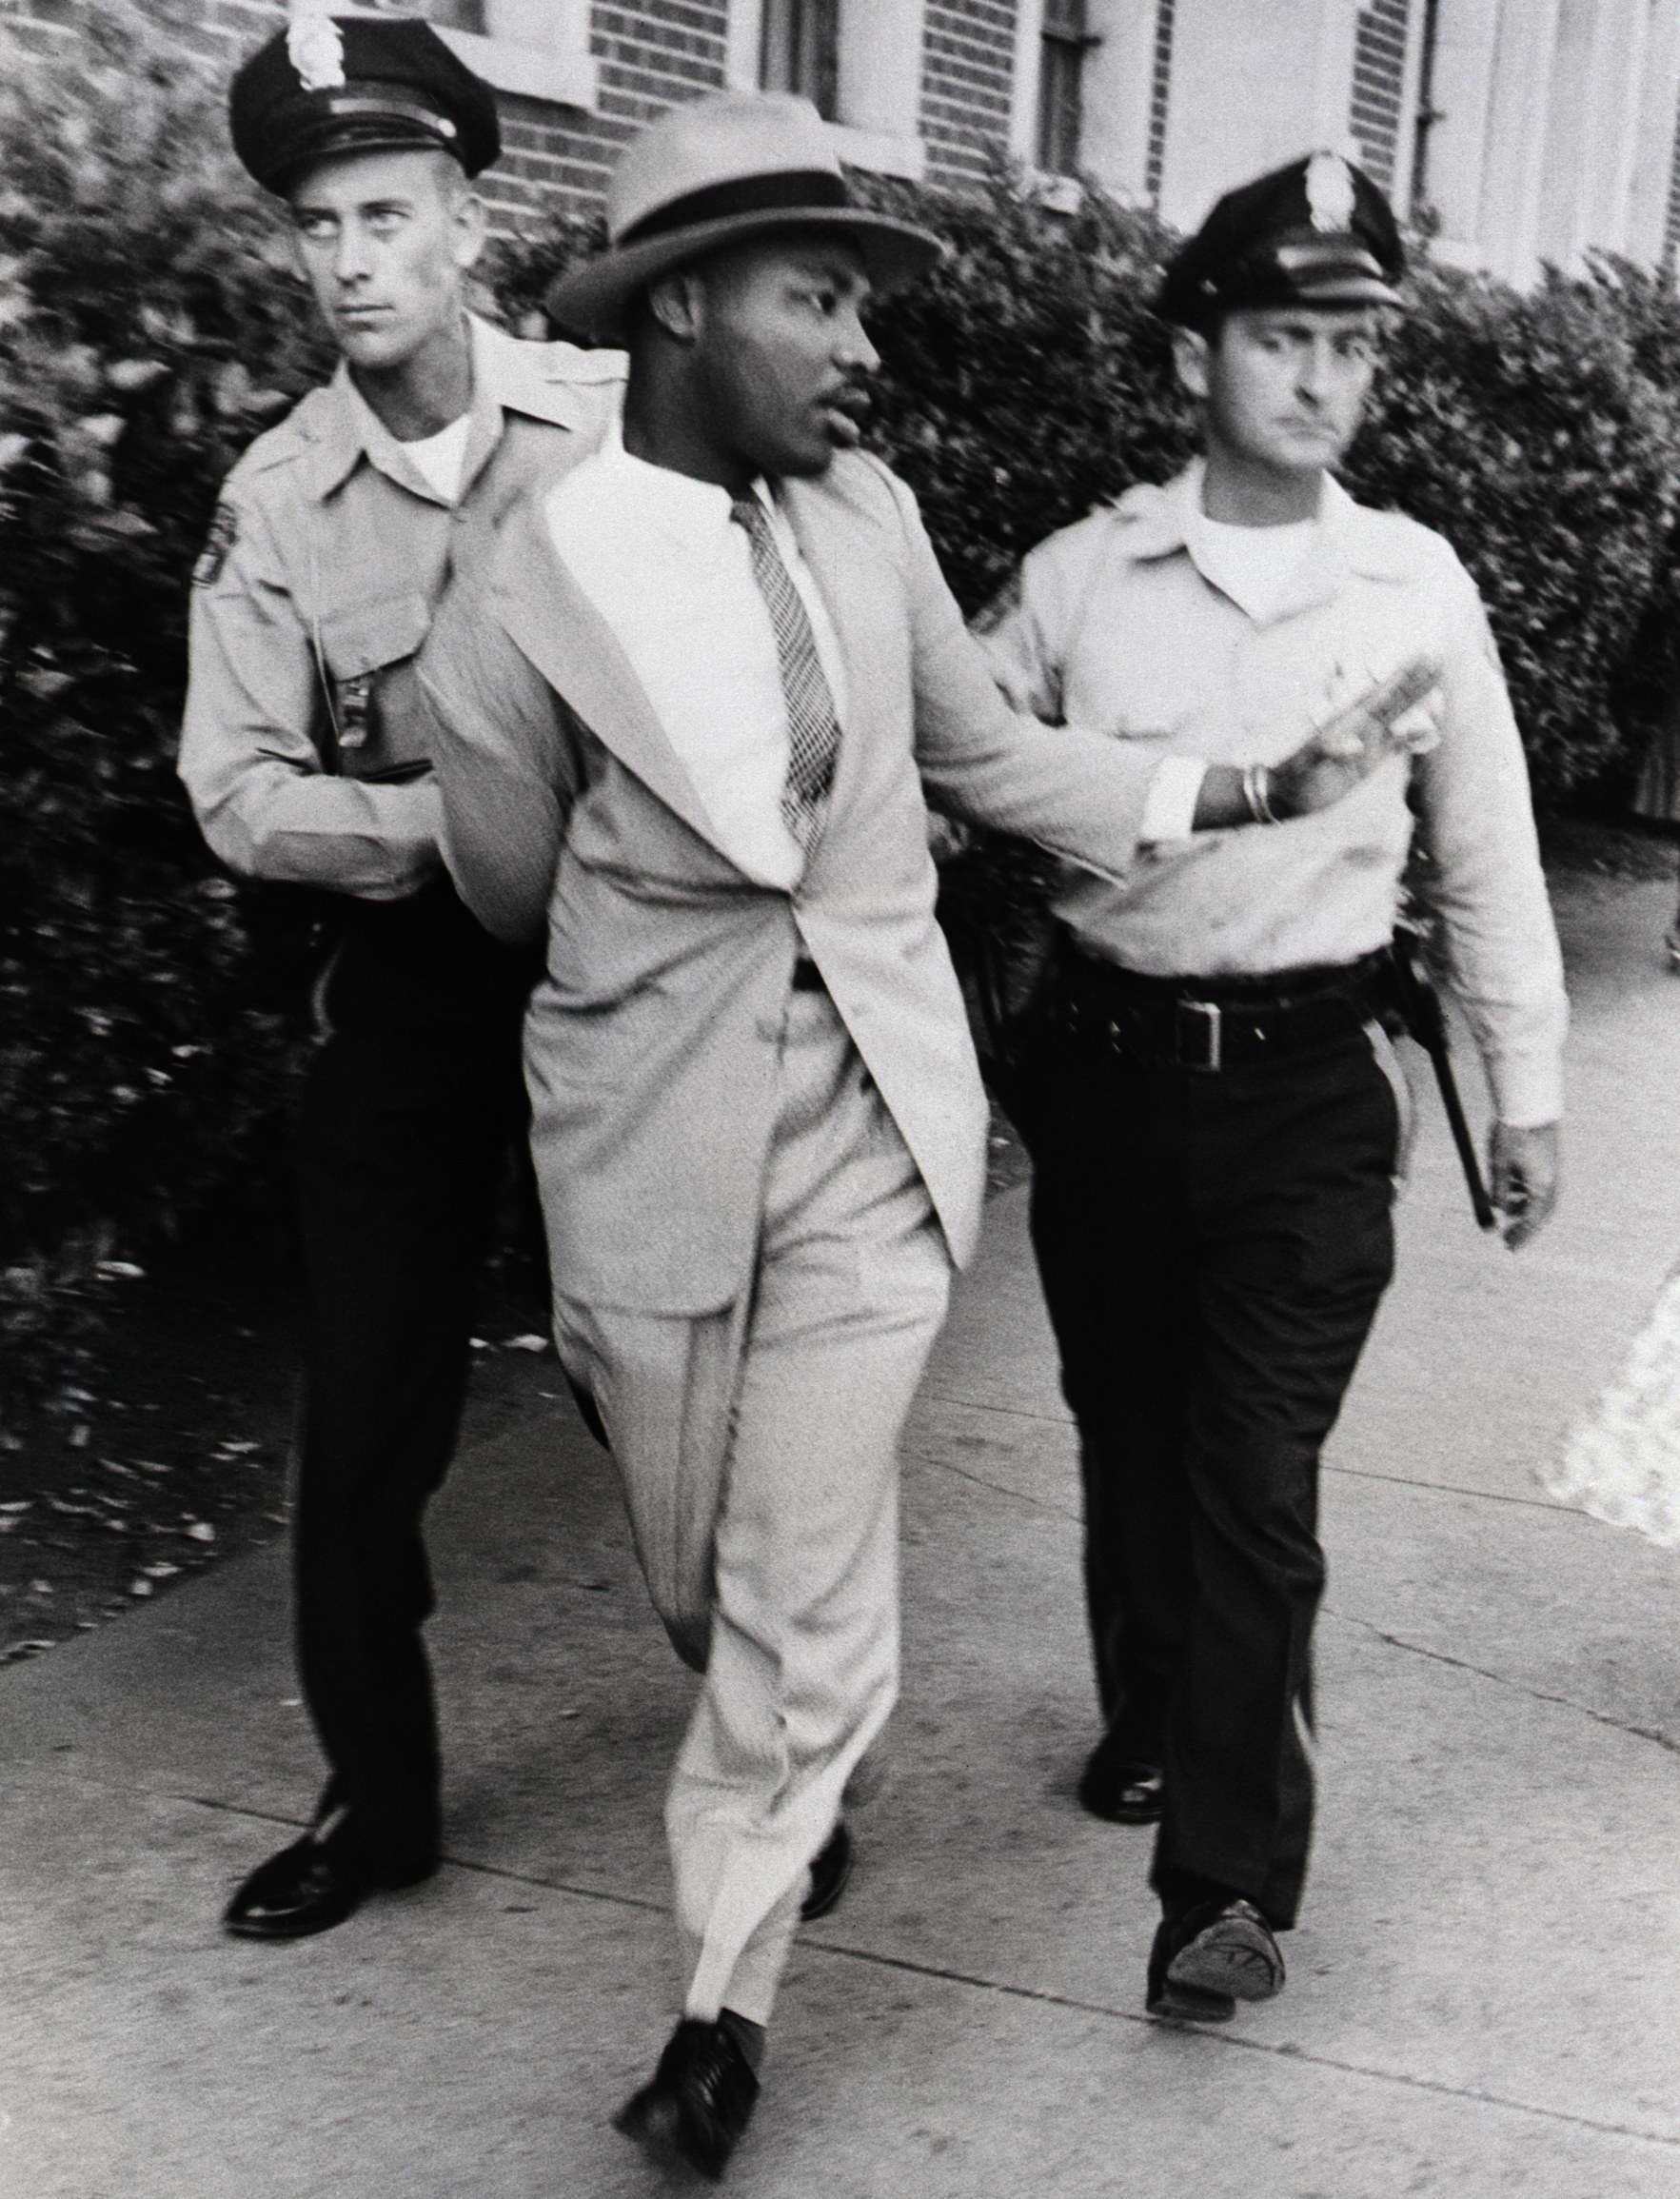 Dr King getting arrested